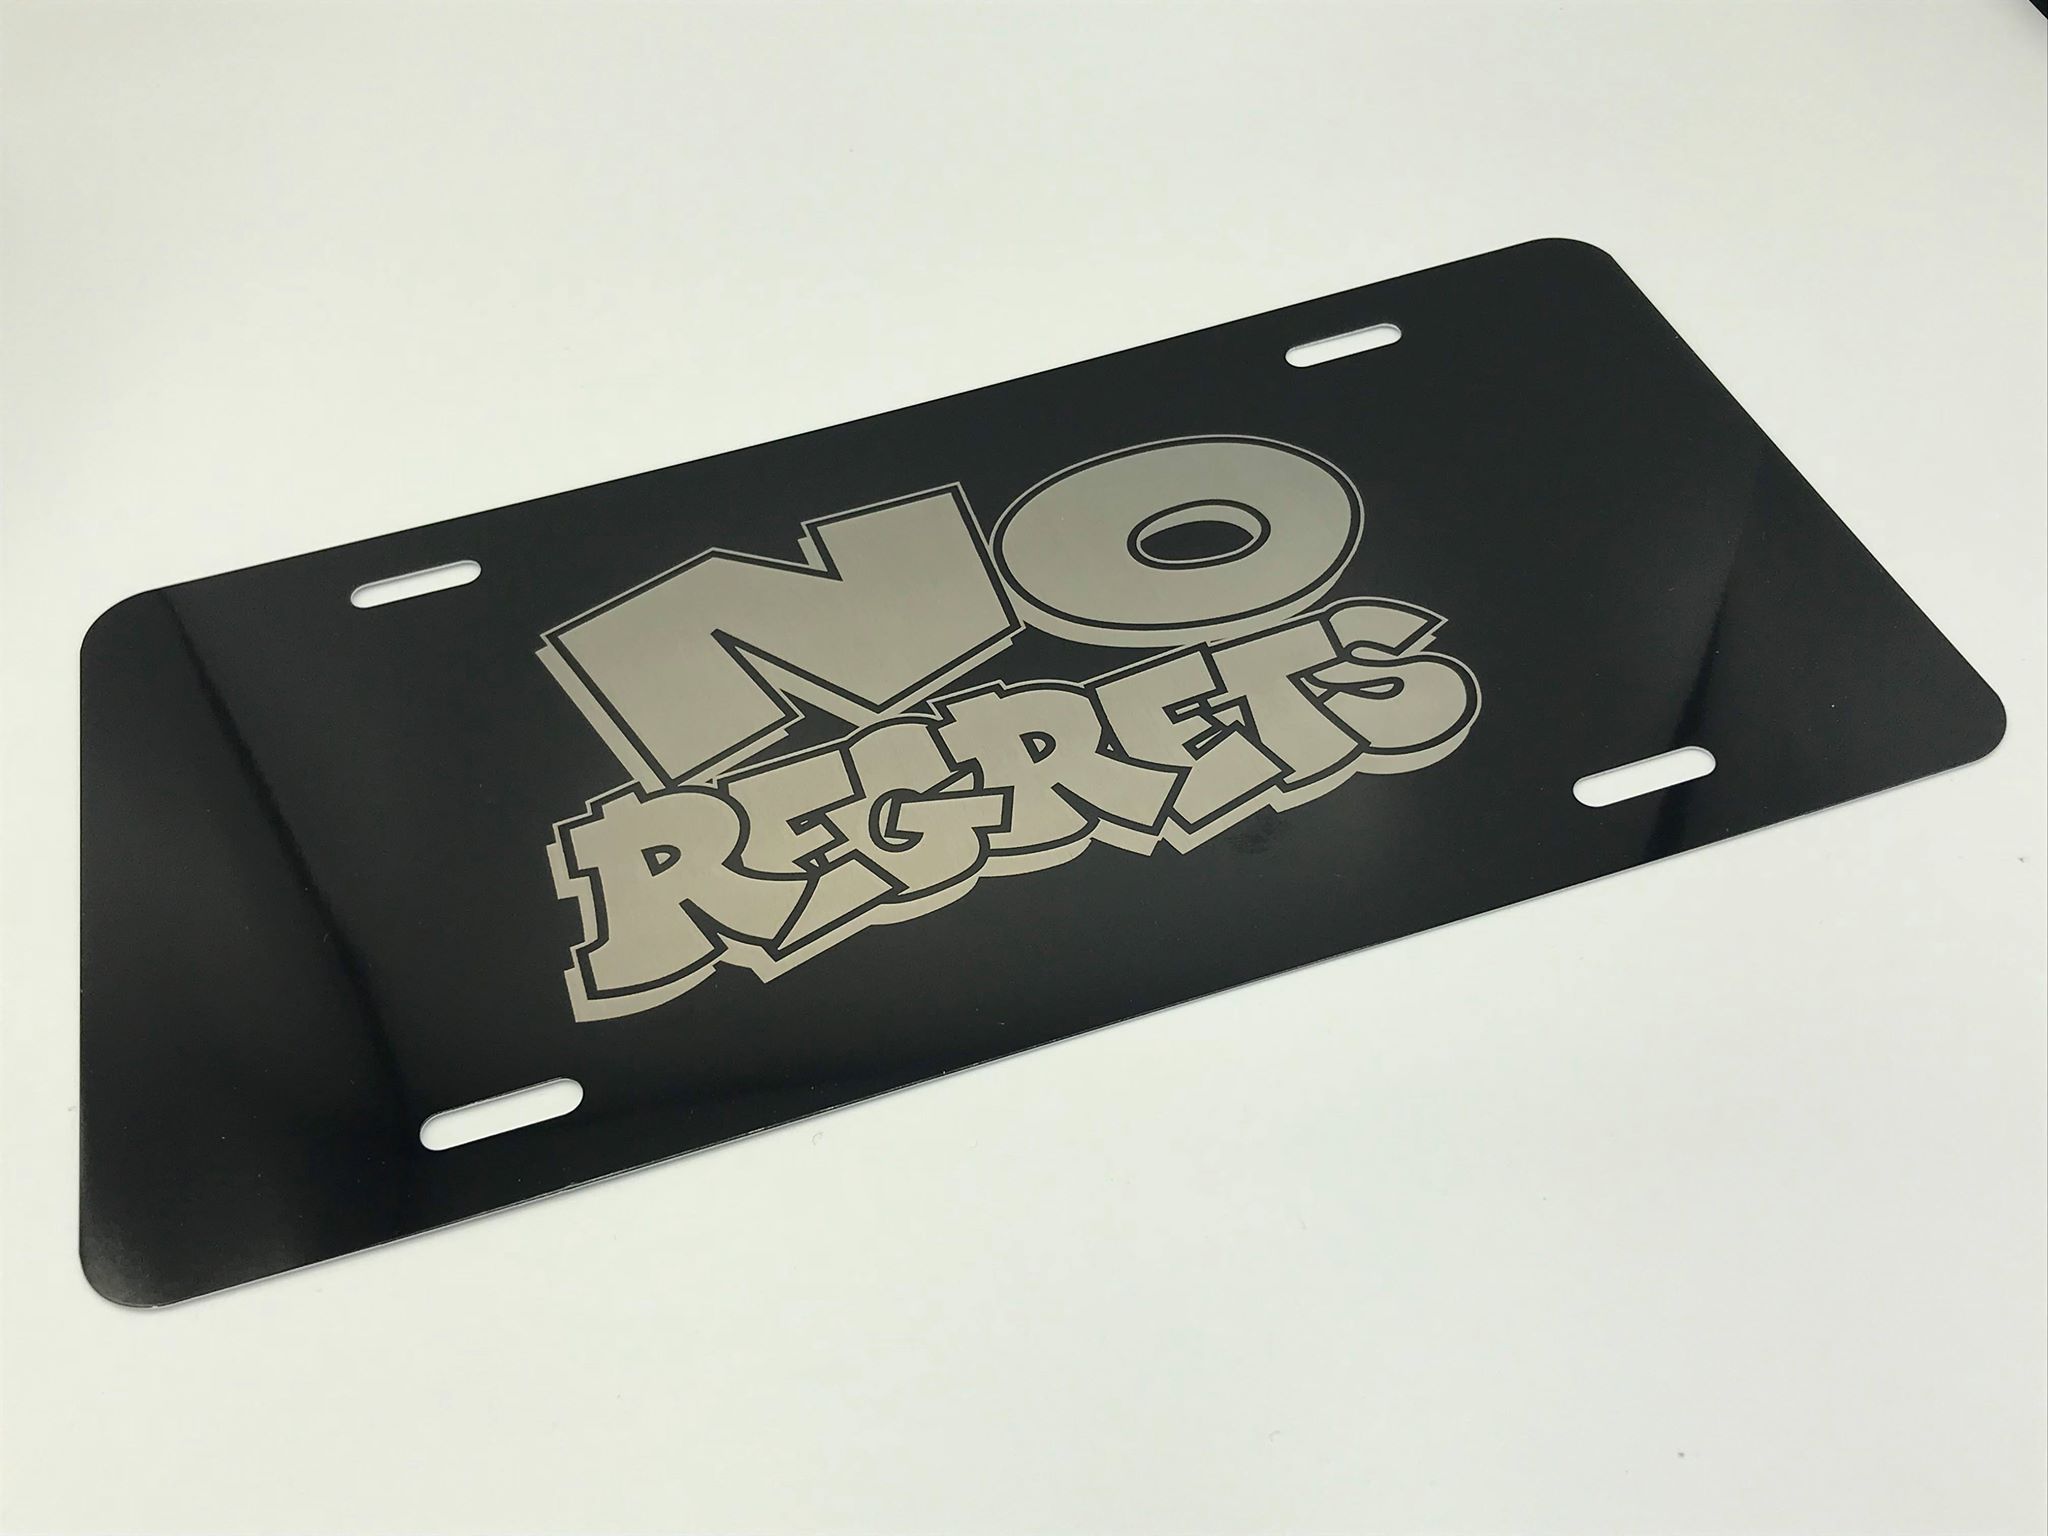 NR - Stainless Steel License Plate